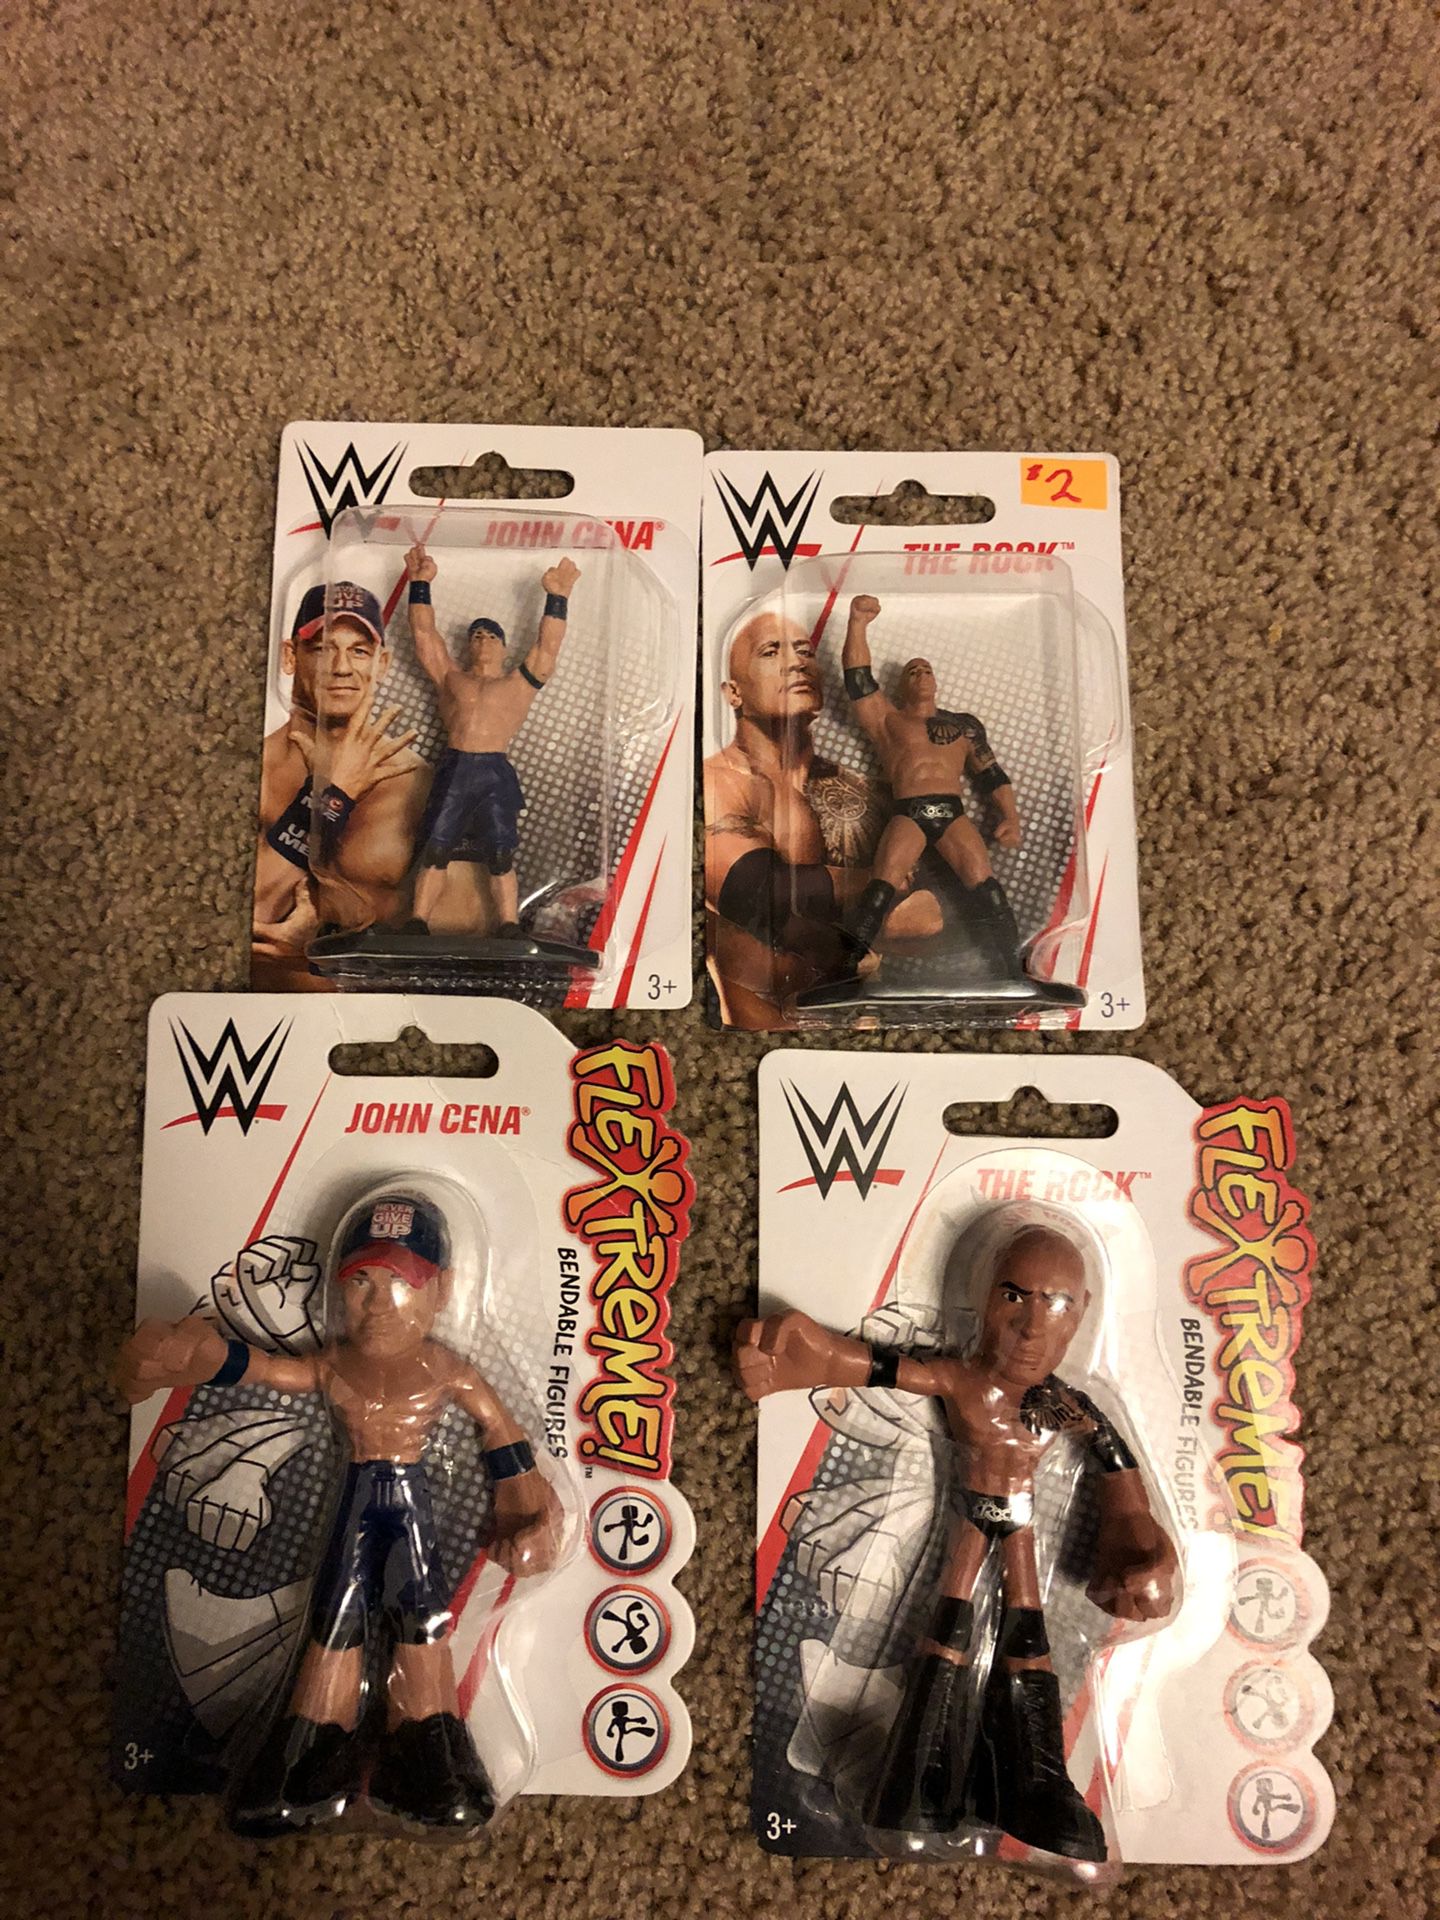 Four different wrestling figures